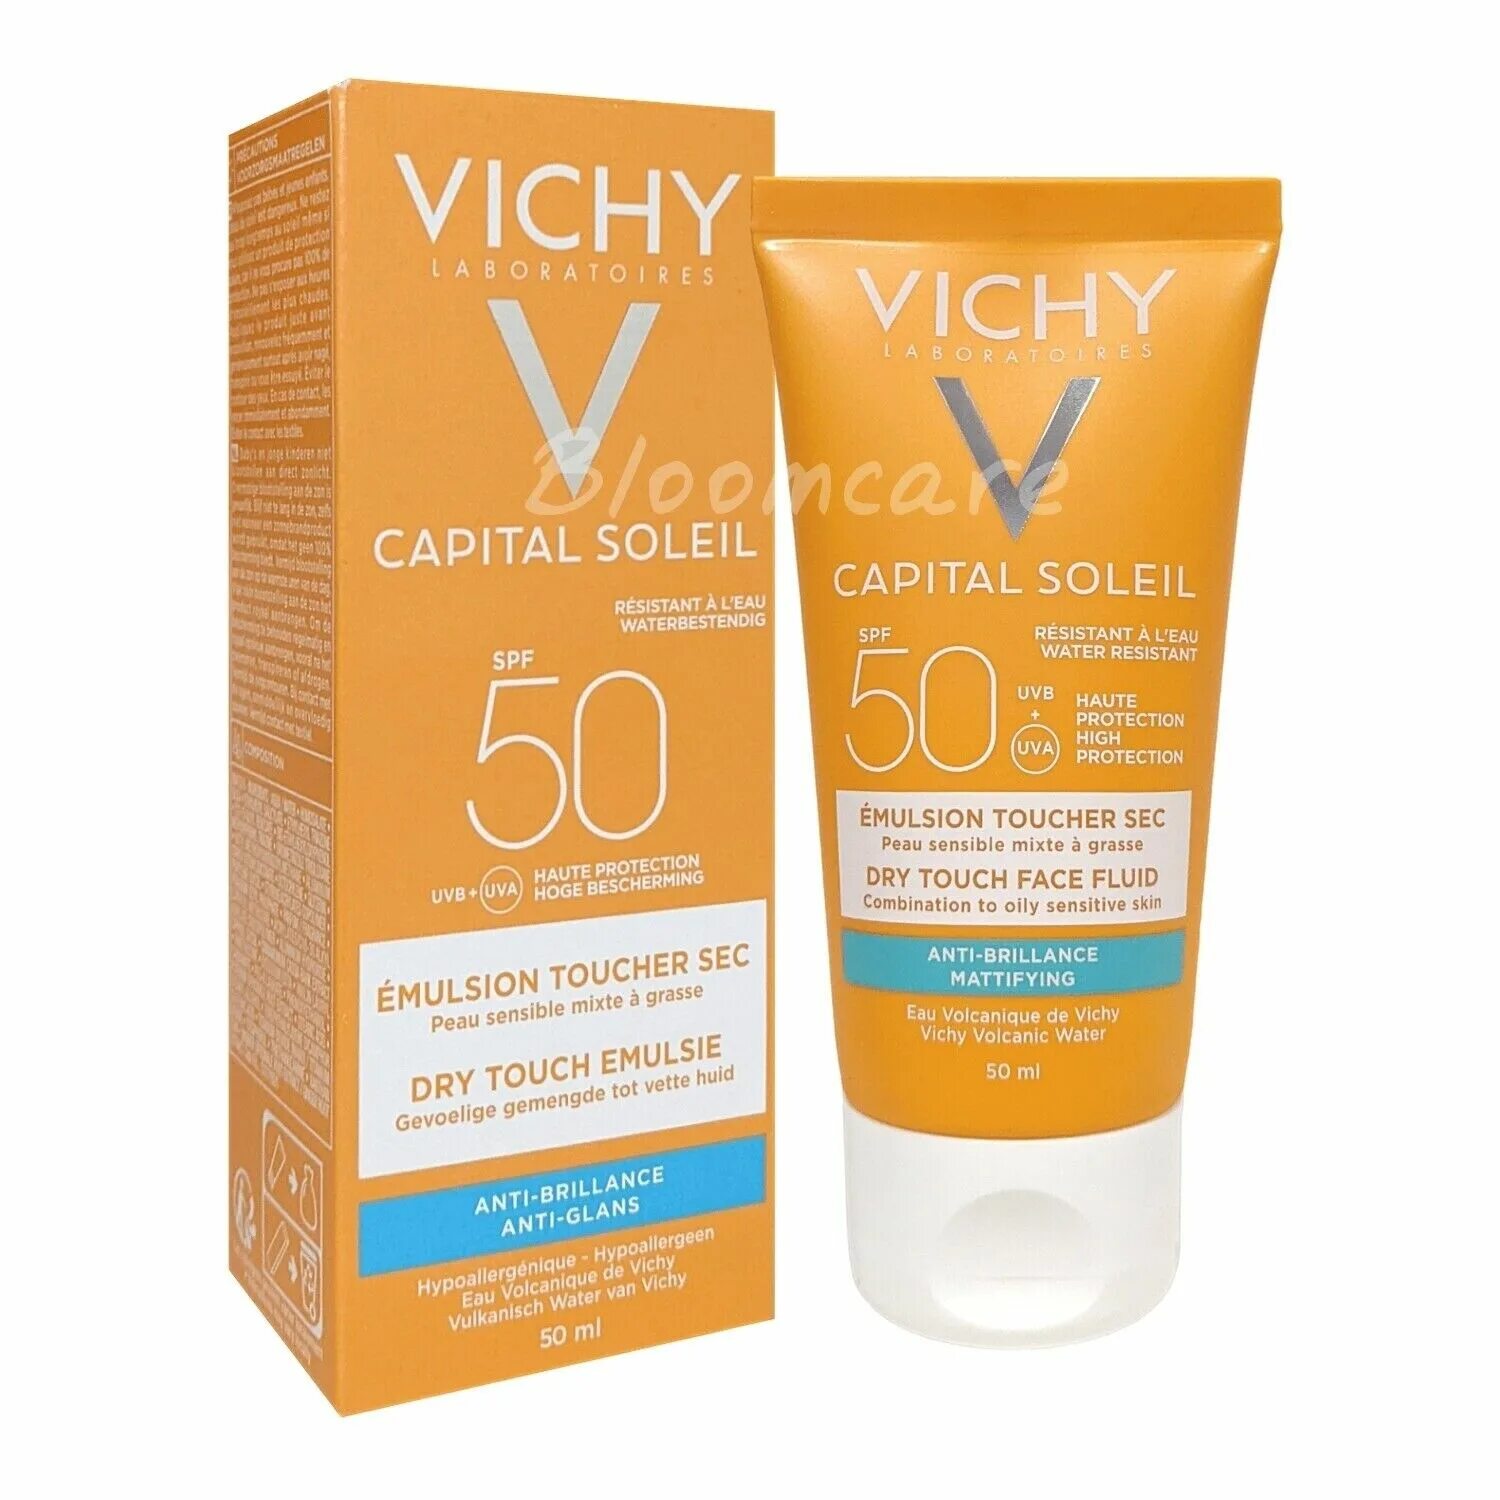 Capital soleil 50 мл. Vichy SPF 50. Vichy СПФ 50. Vichy Capital Soleil Mattifying face Fluid Dry Touch SPF 50. Vichy Capital Soleil SPF 50.